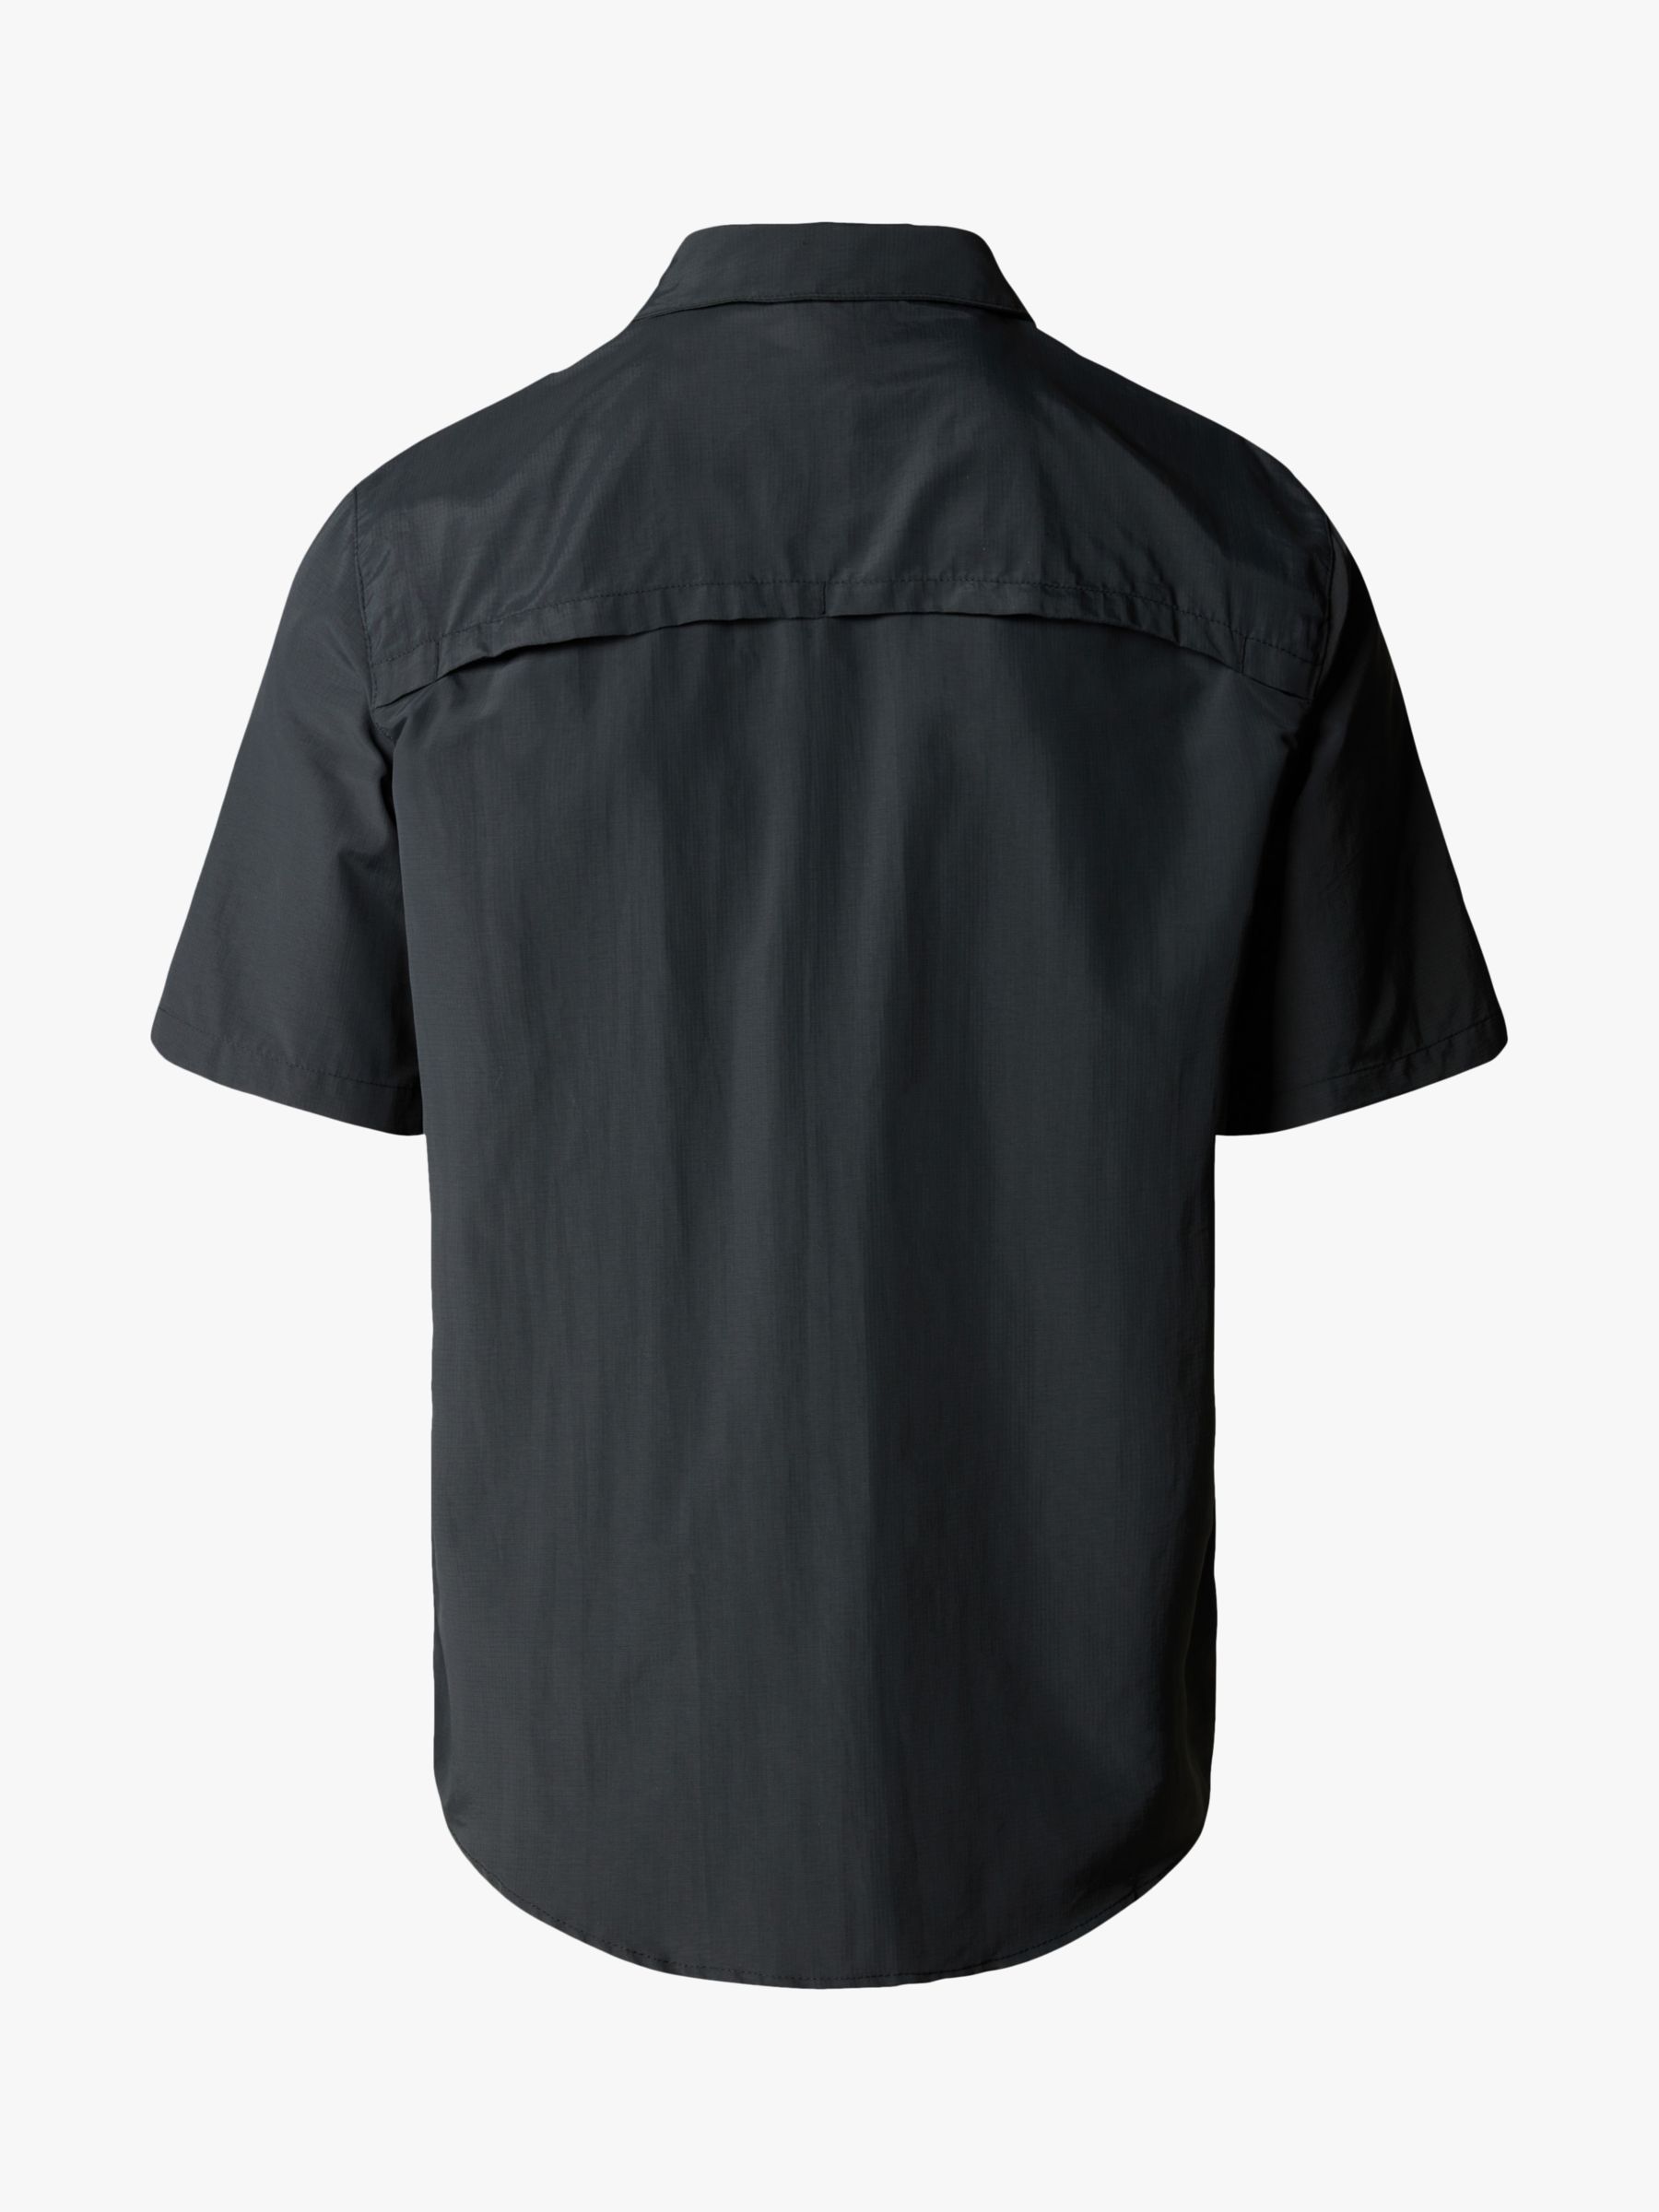 The North Face Short Sleeve Sequoia Shirt, Asphalt Grey, XL